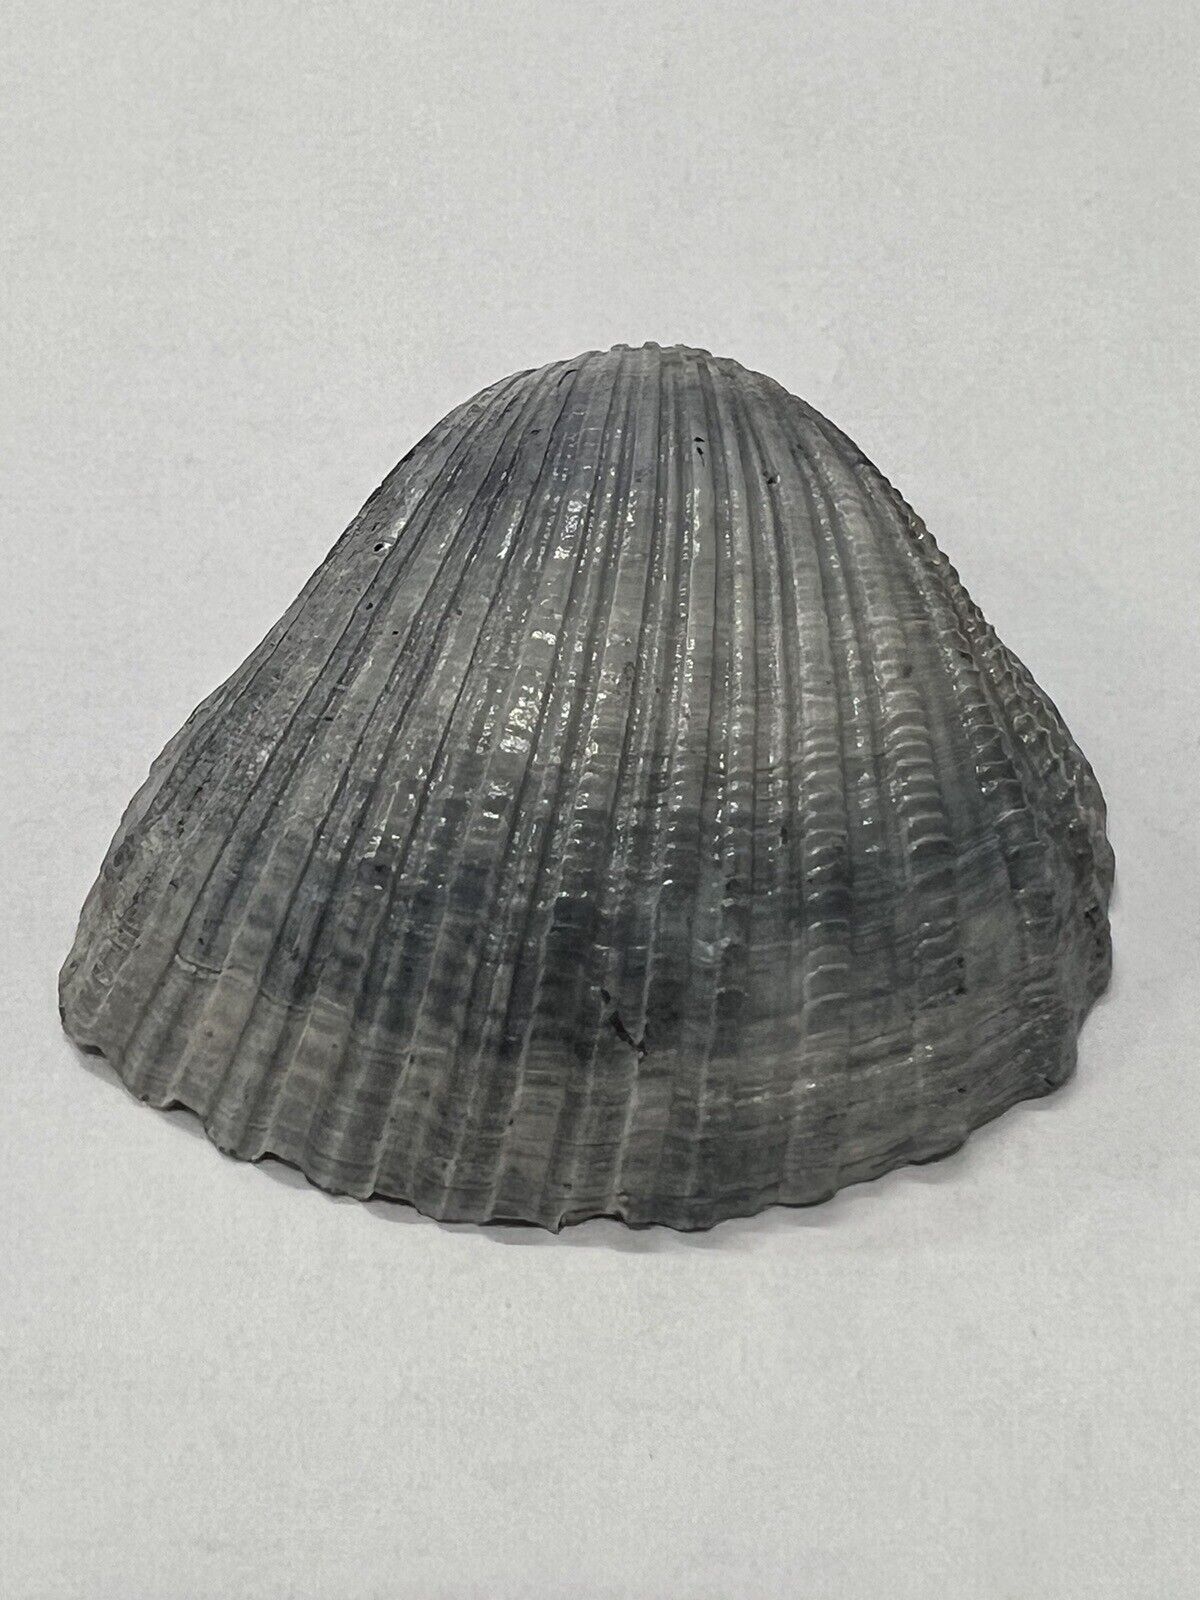 RARE Fossilized ARC Shell From Central Florida Pliocene Era